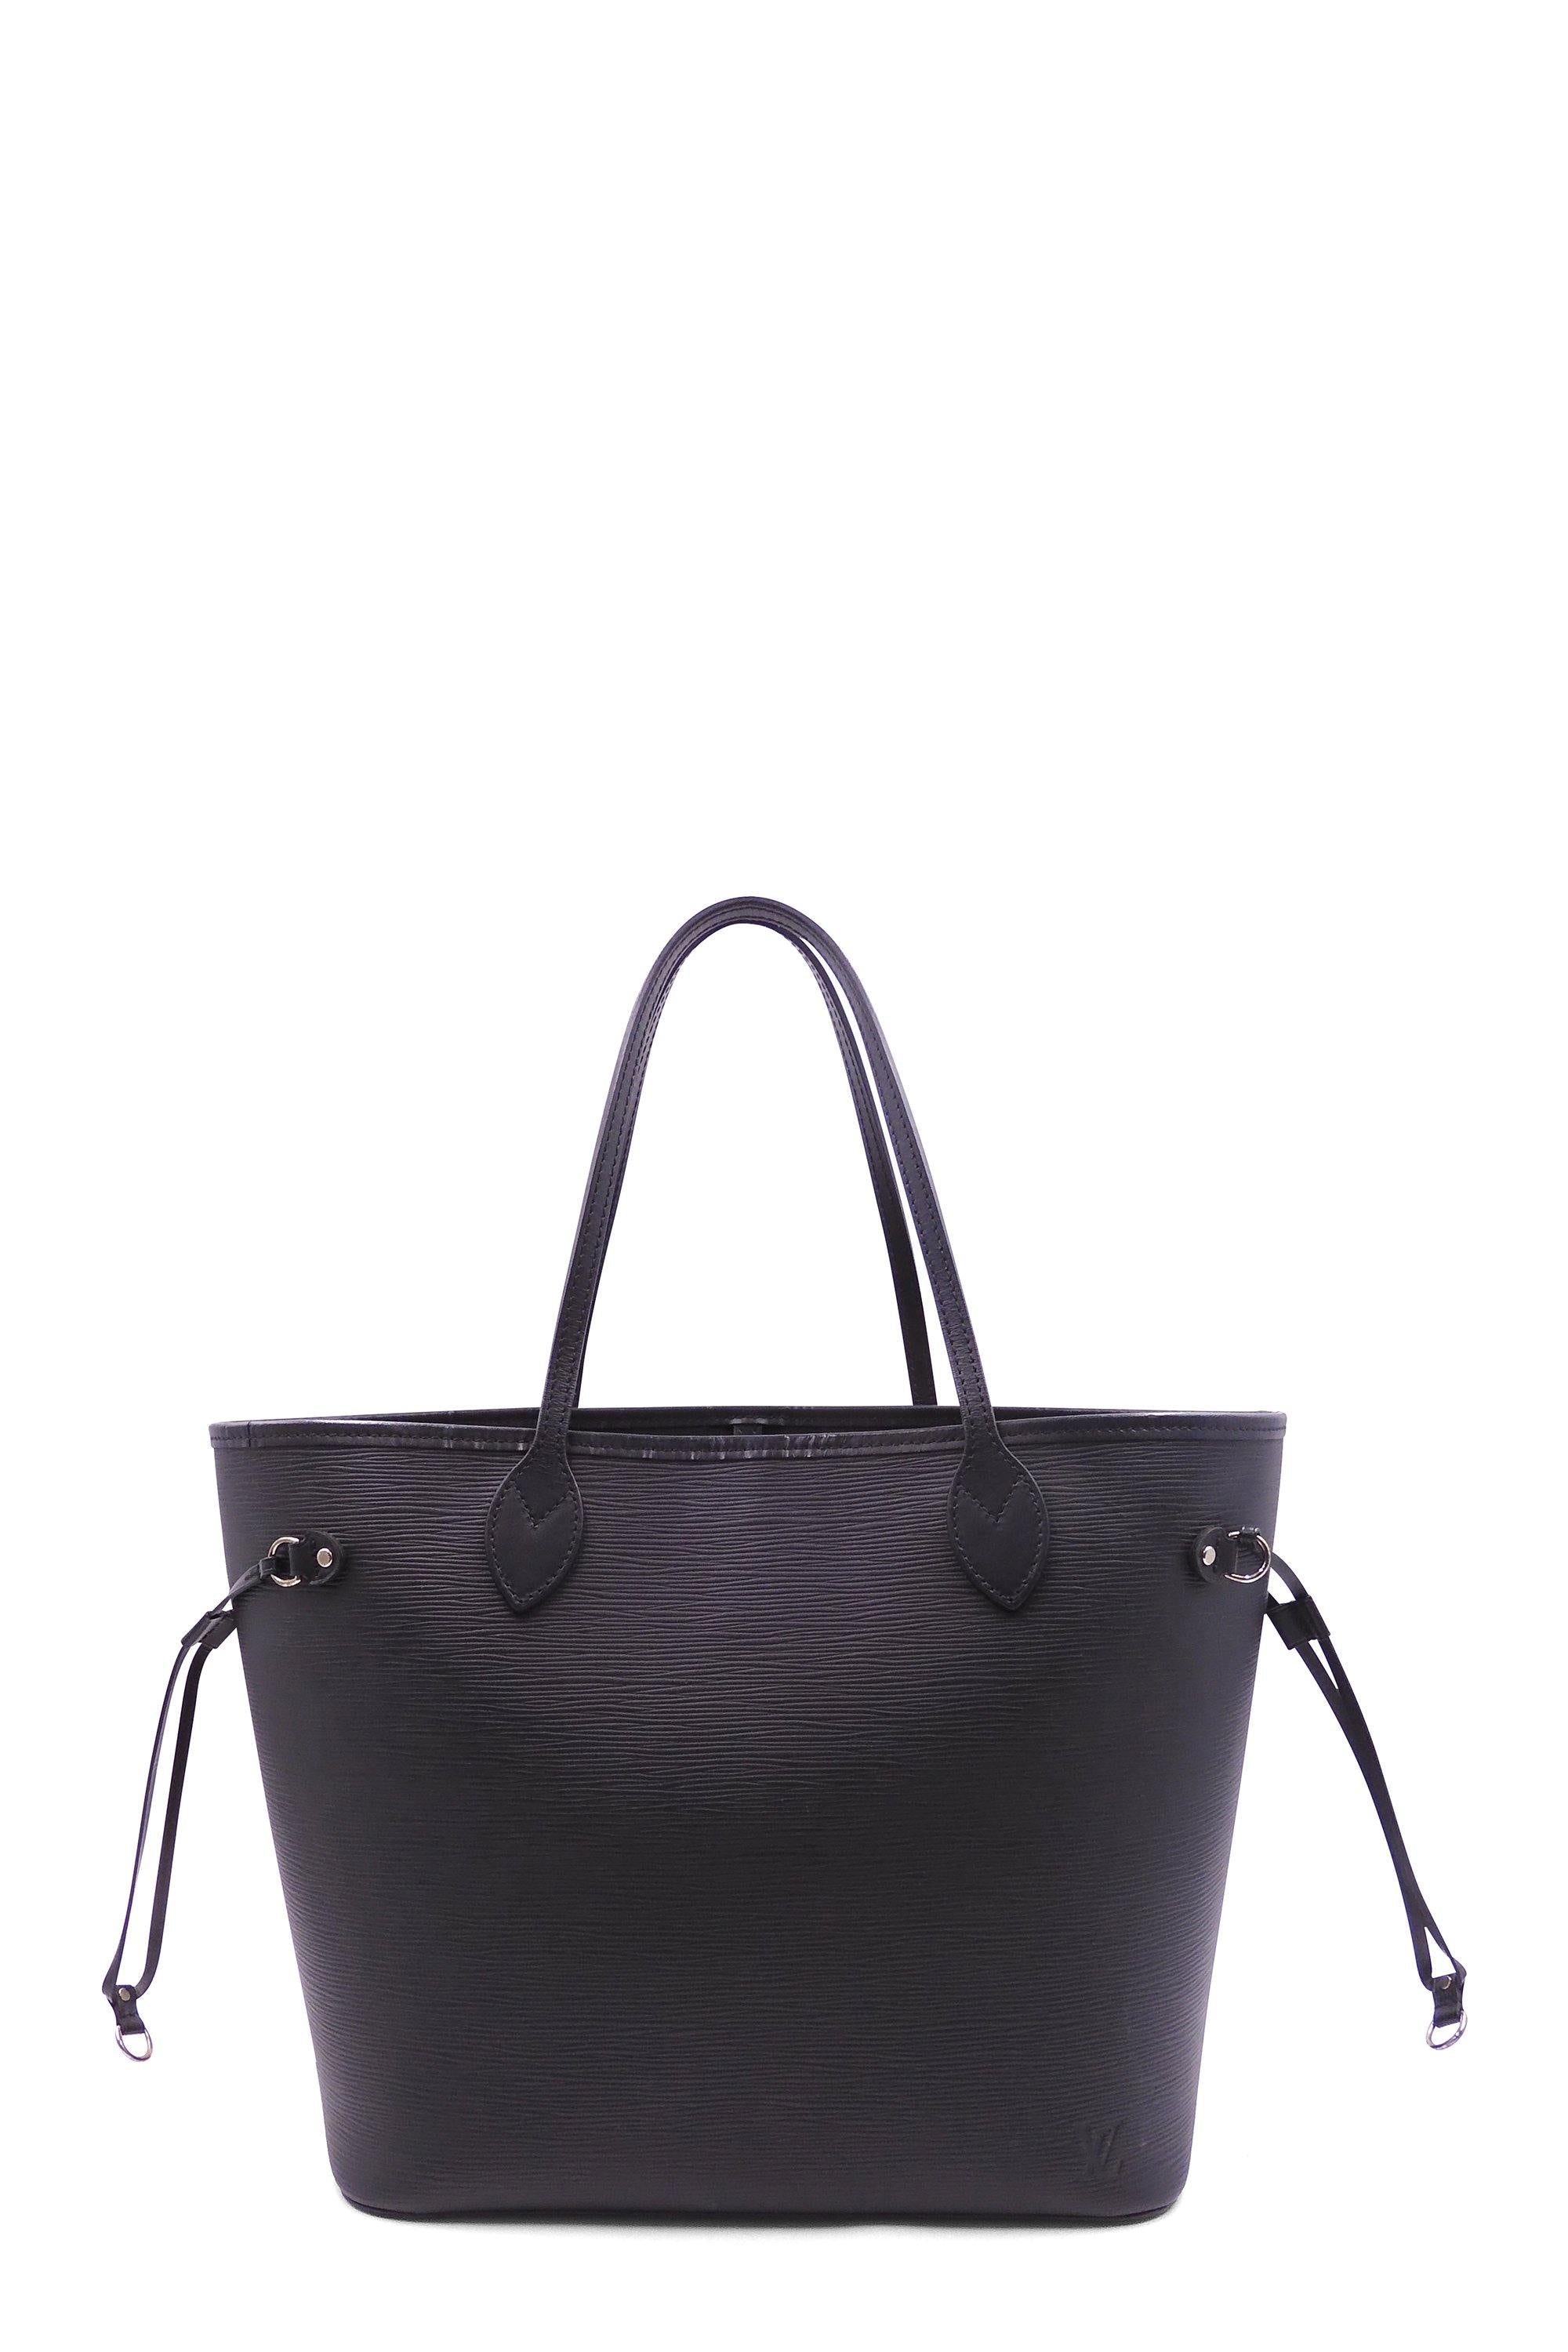 Louis Vuitton Neverfull Noir Epi Black Leather MM Tote Bag LV